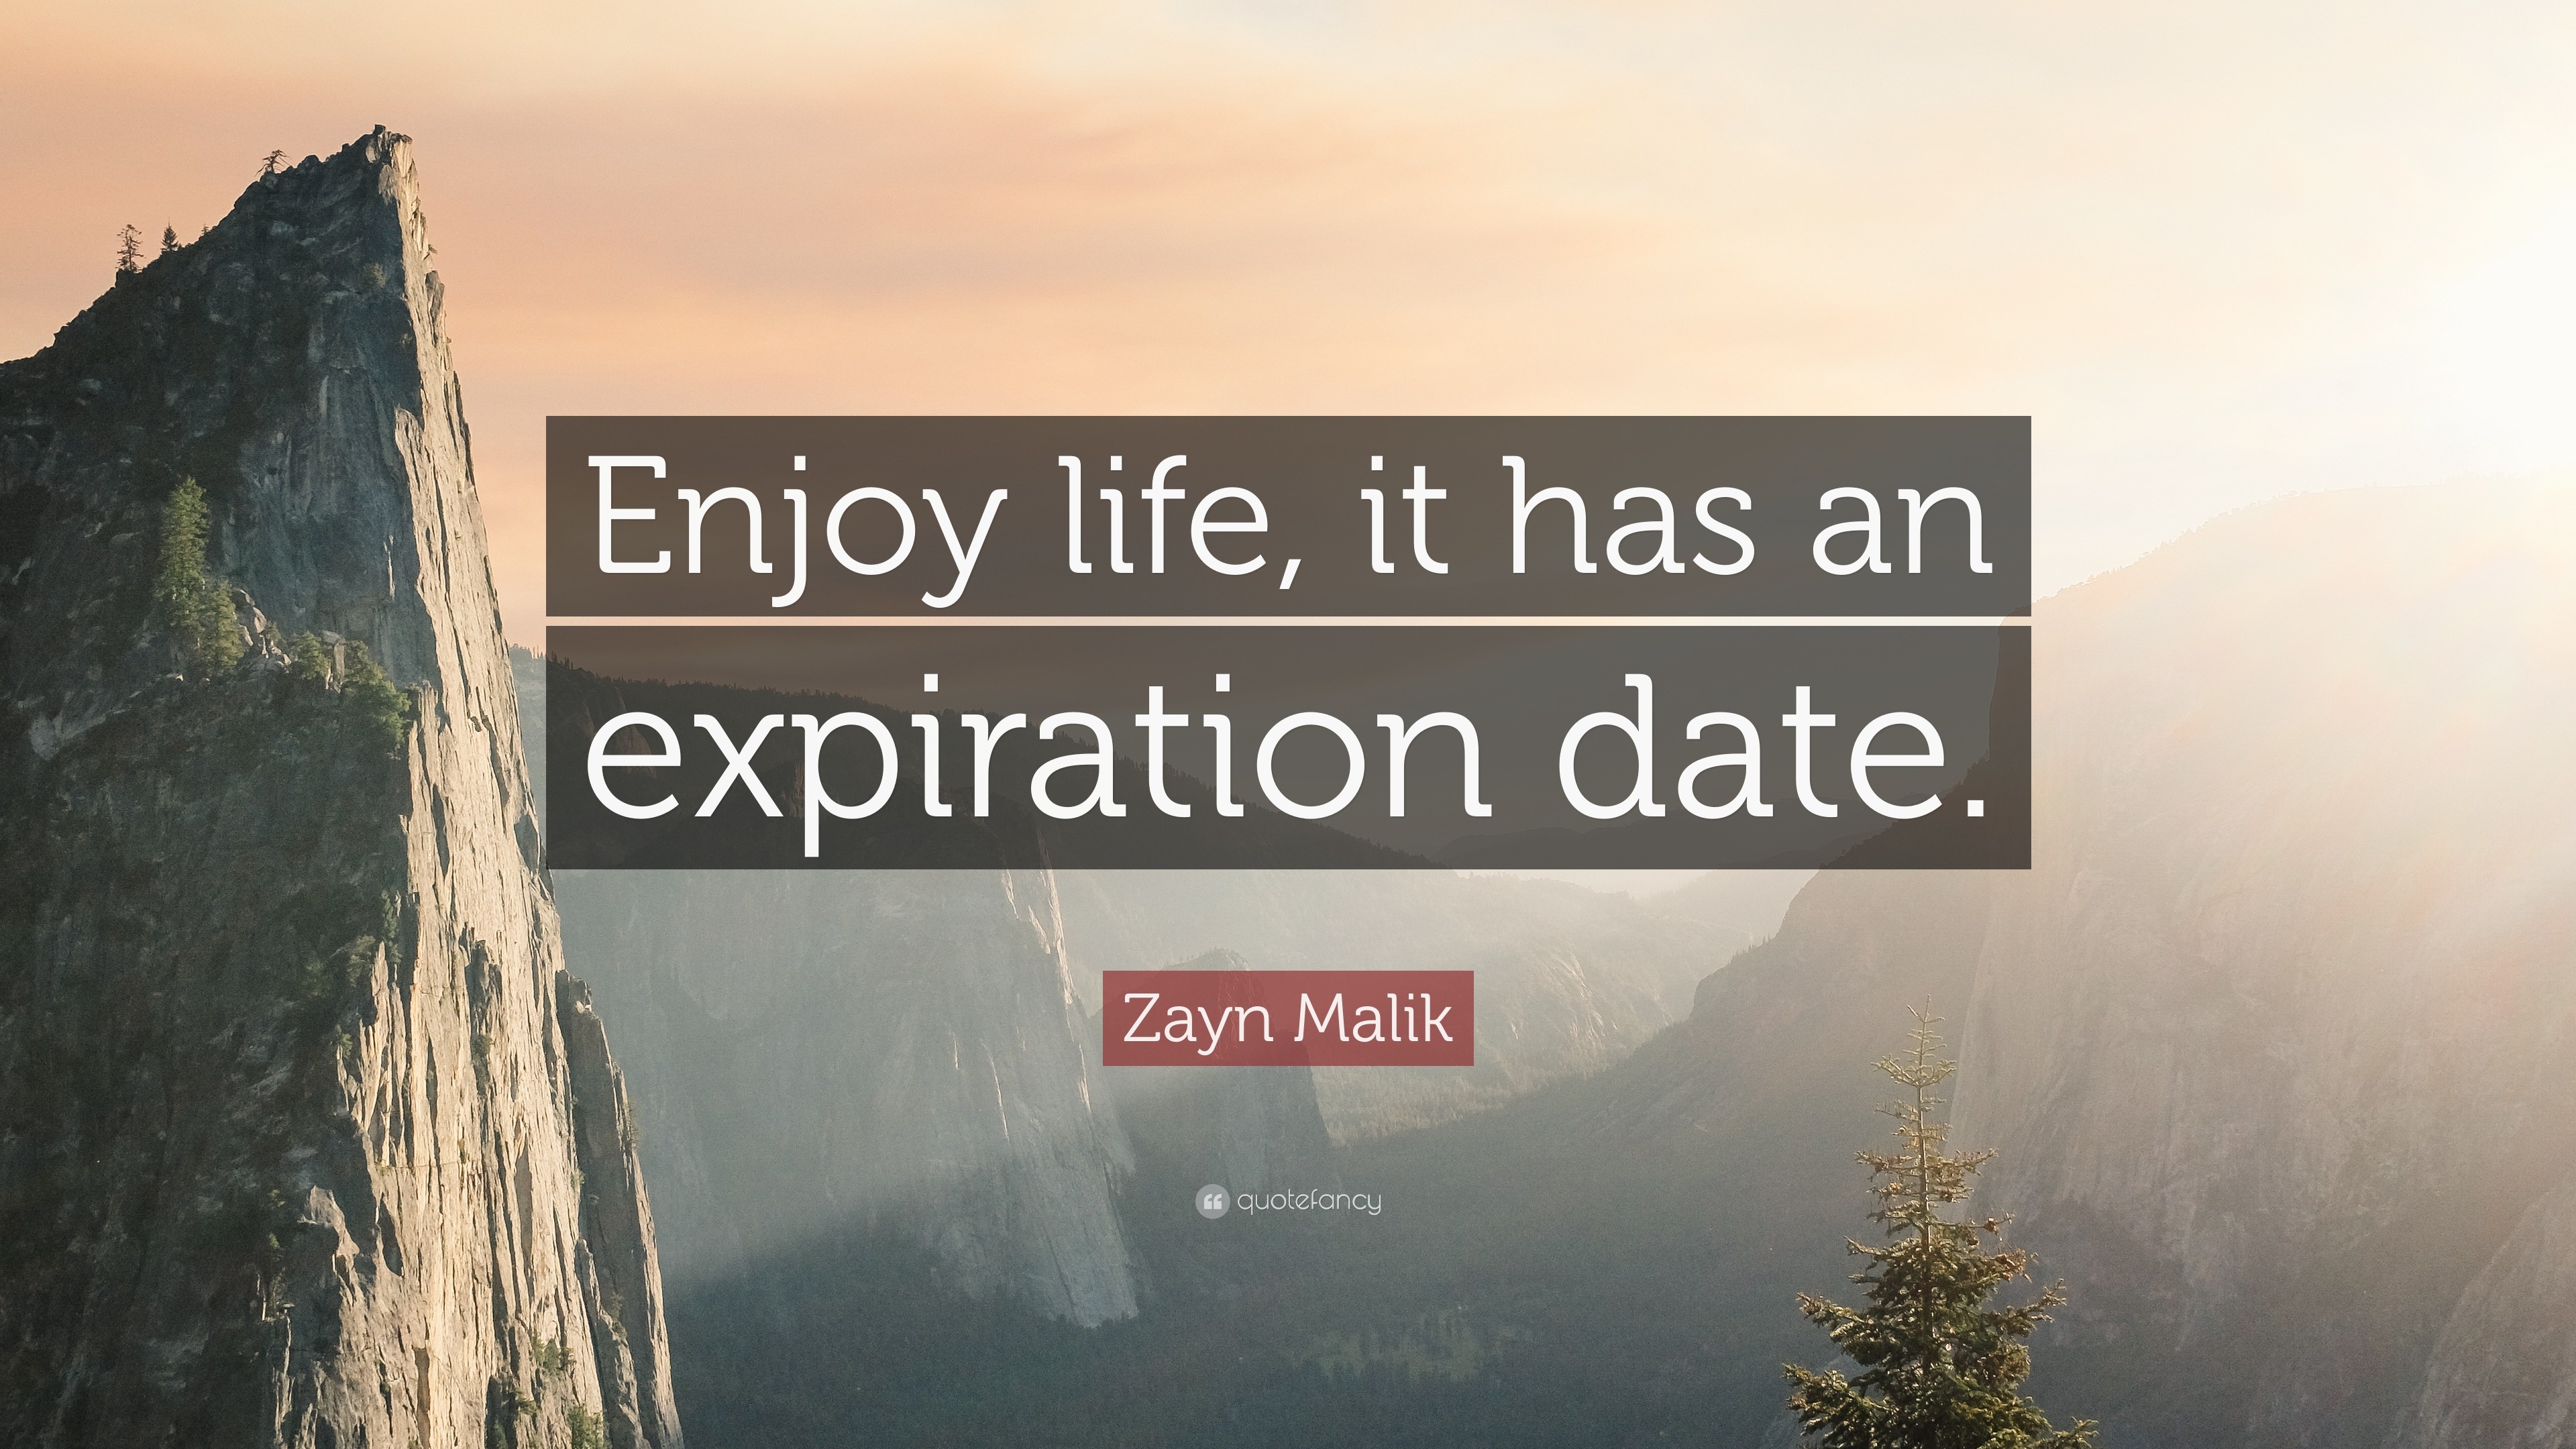 Zayn Malik Quote: “Enjoy life, it has an expiration date.”